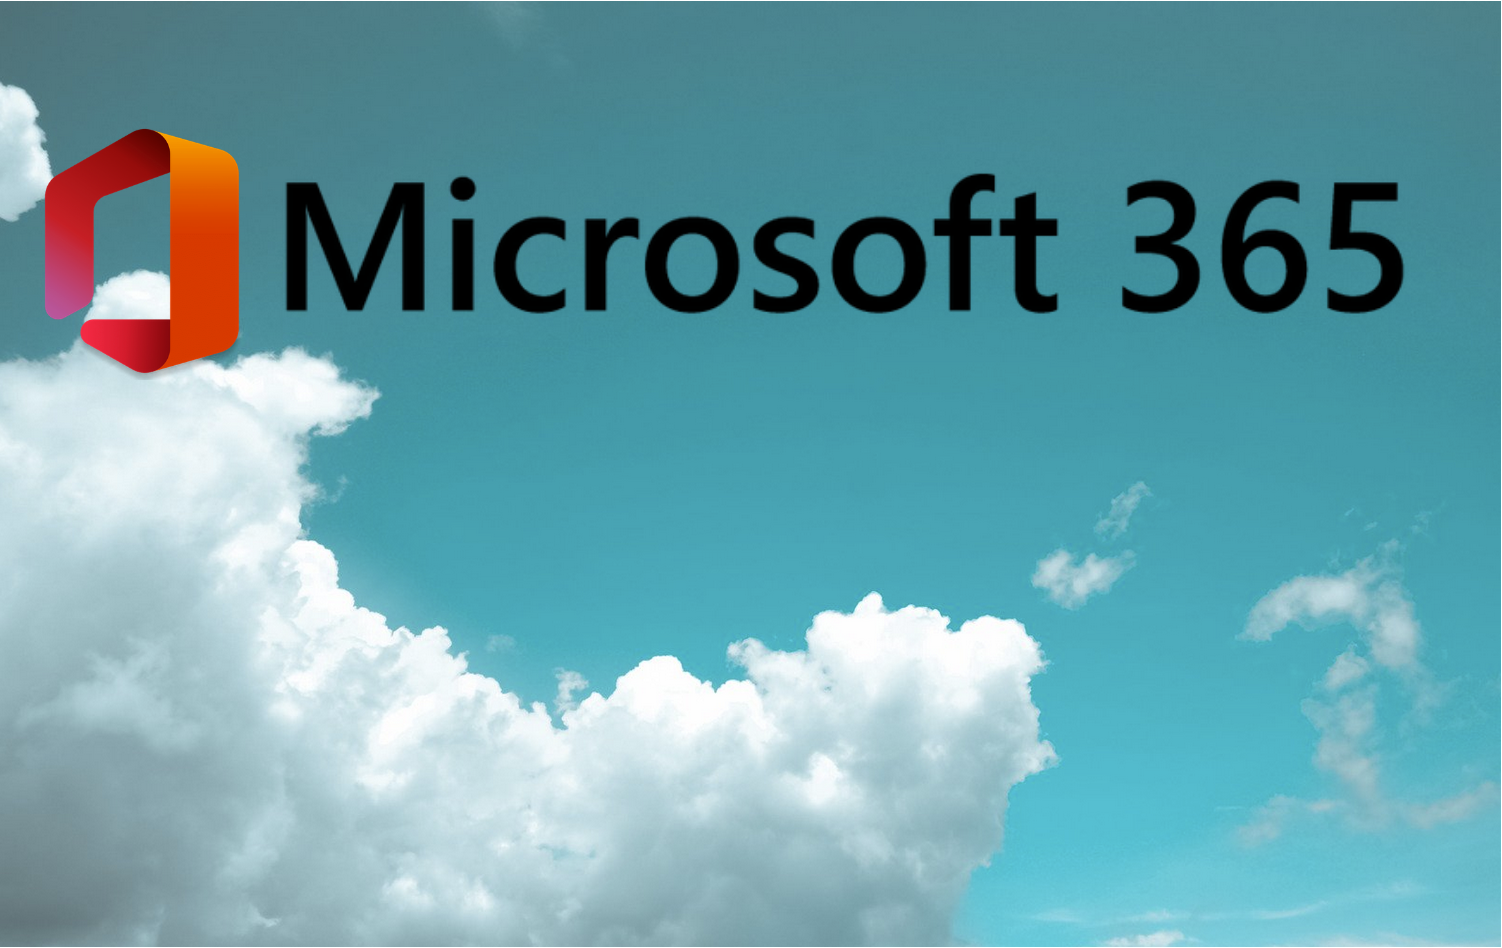 Microsoft 365 new logo